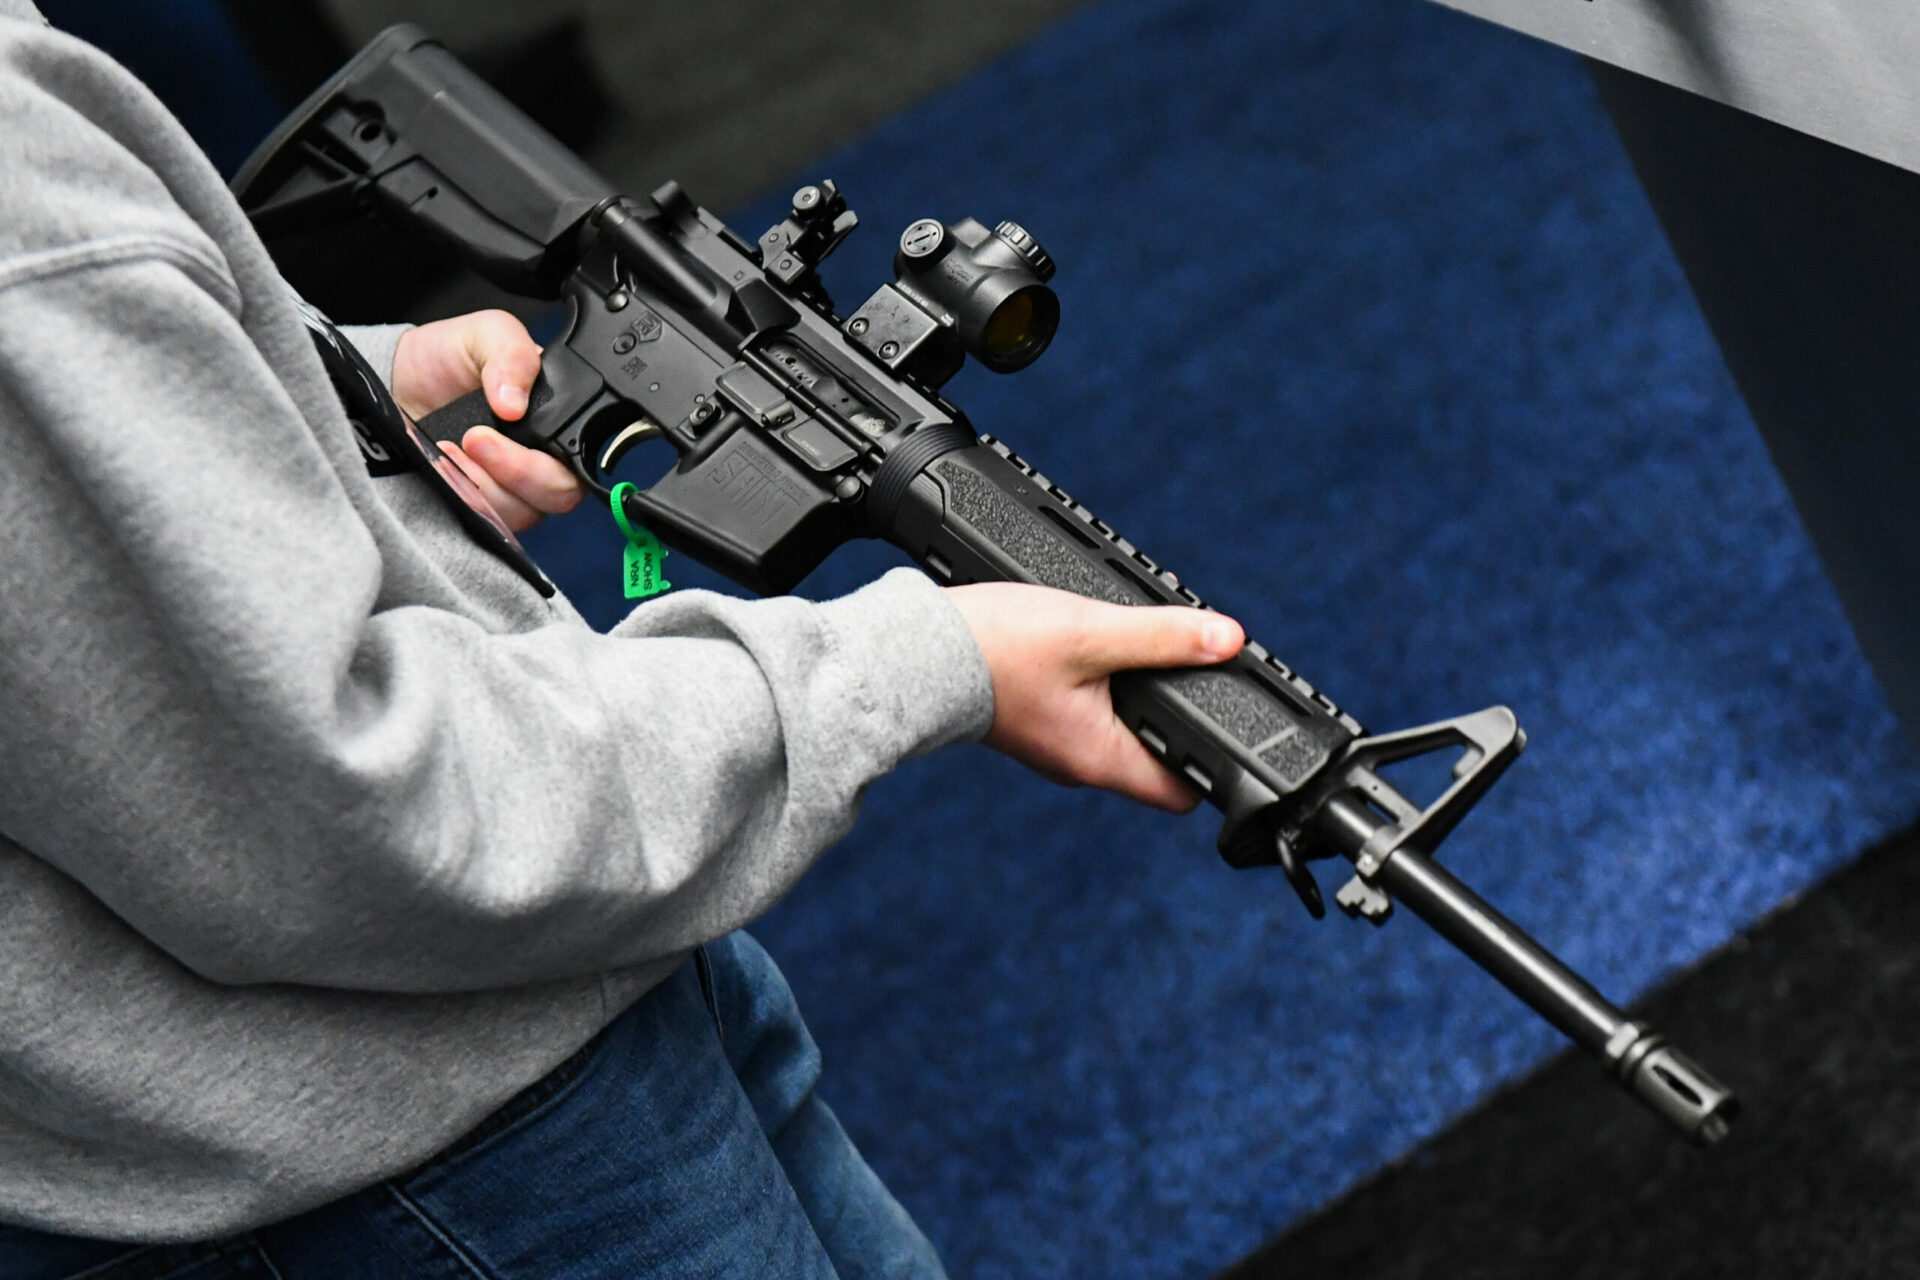 Buy a ticket, get an AR-15: Missouri legislator’s rifle raffle draws criticism in KC area